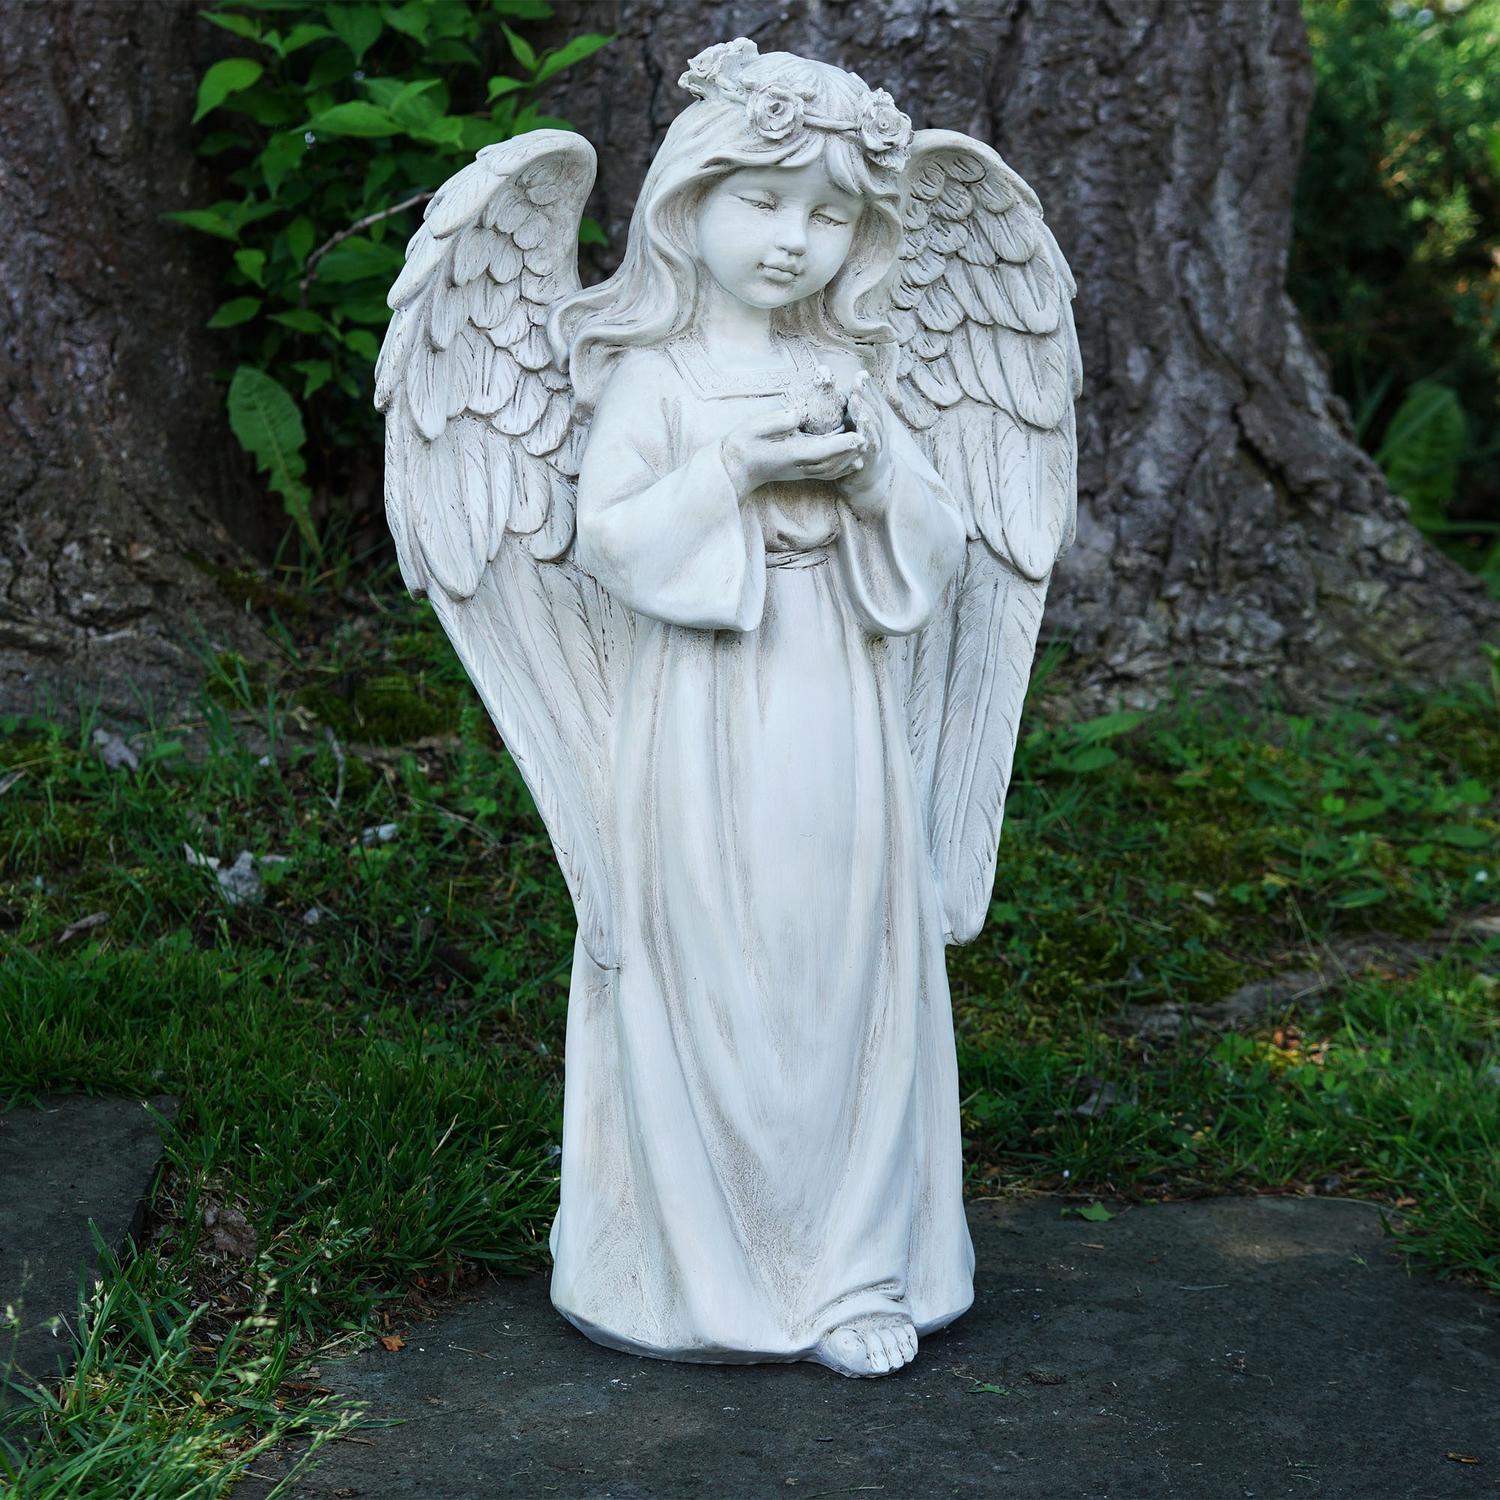 Northlight 20.5" Standing Girl Angel Holding a Bird Outdoor Garden Statue - image 2 of 4